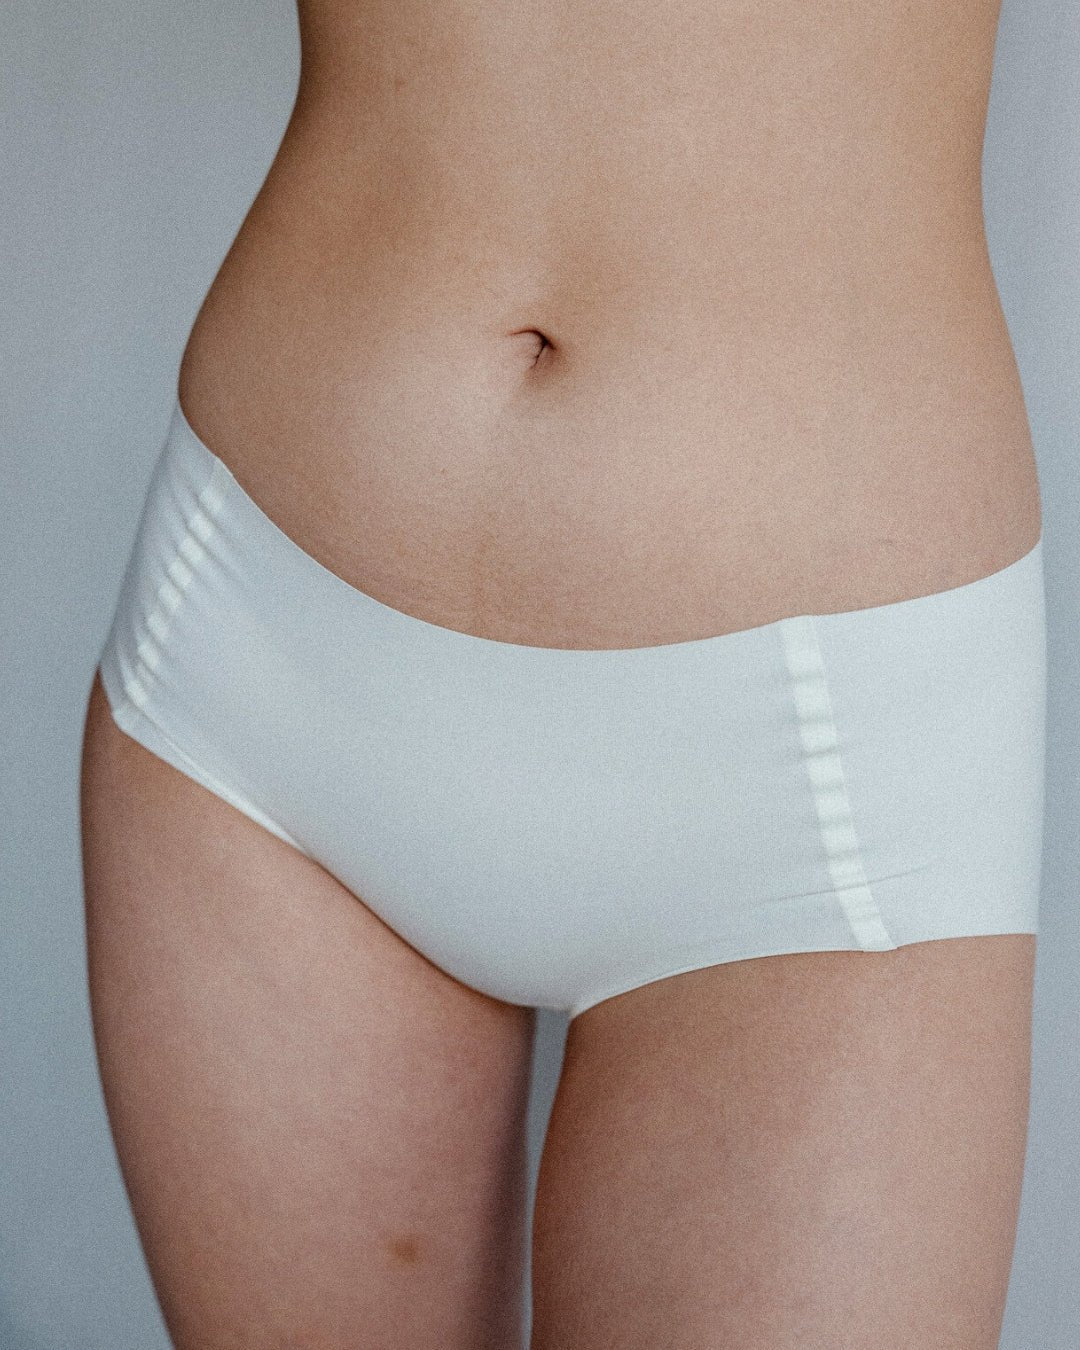 Under Control |5 Pack Women's Boyshorts Panties Seamless Nylon Underwear